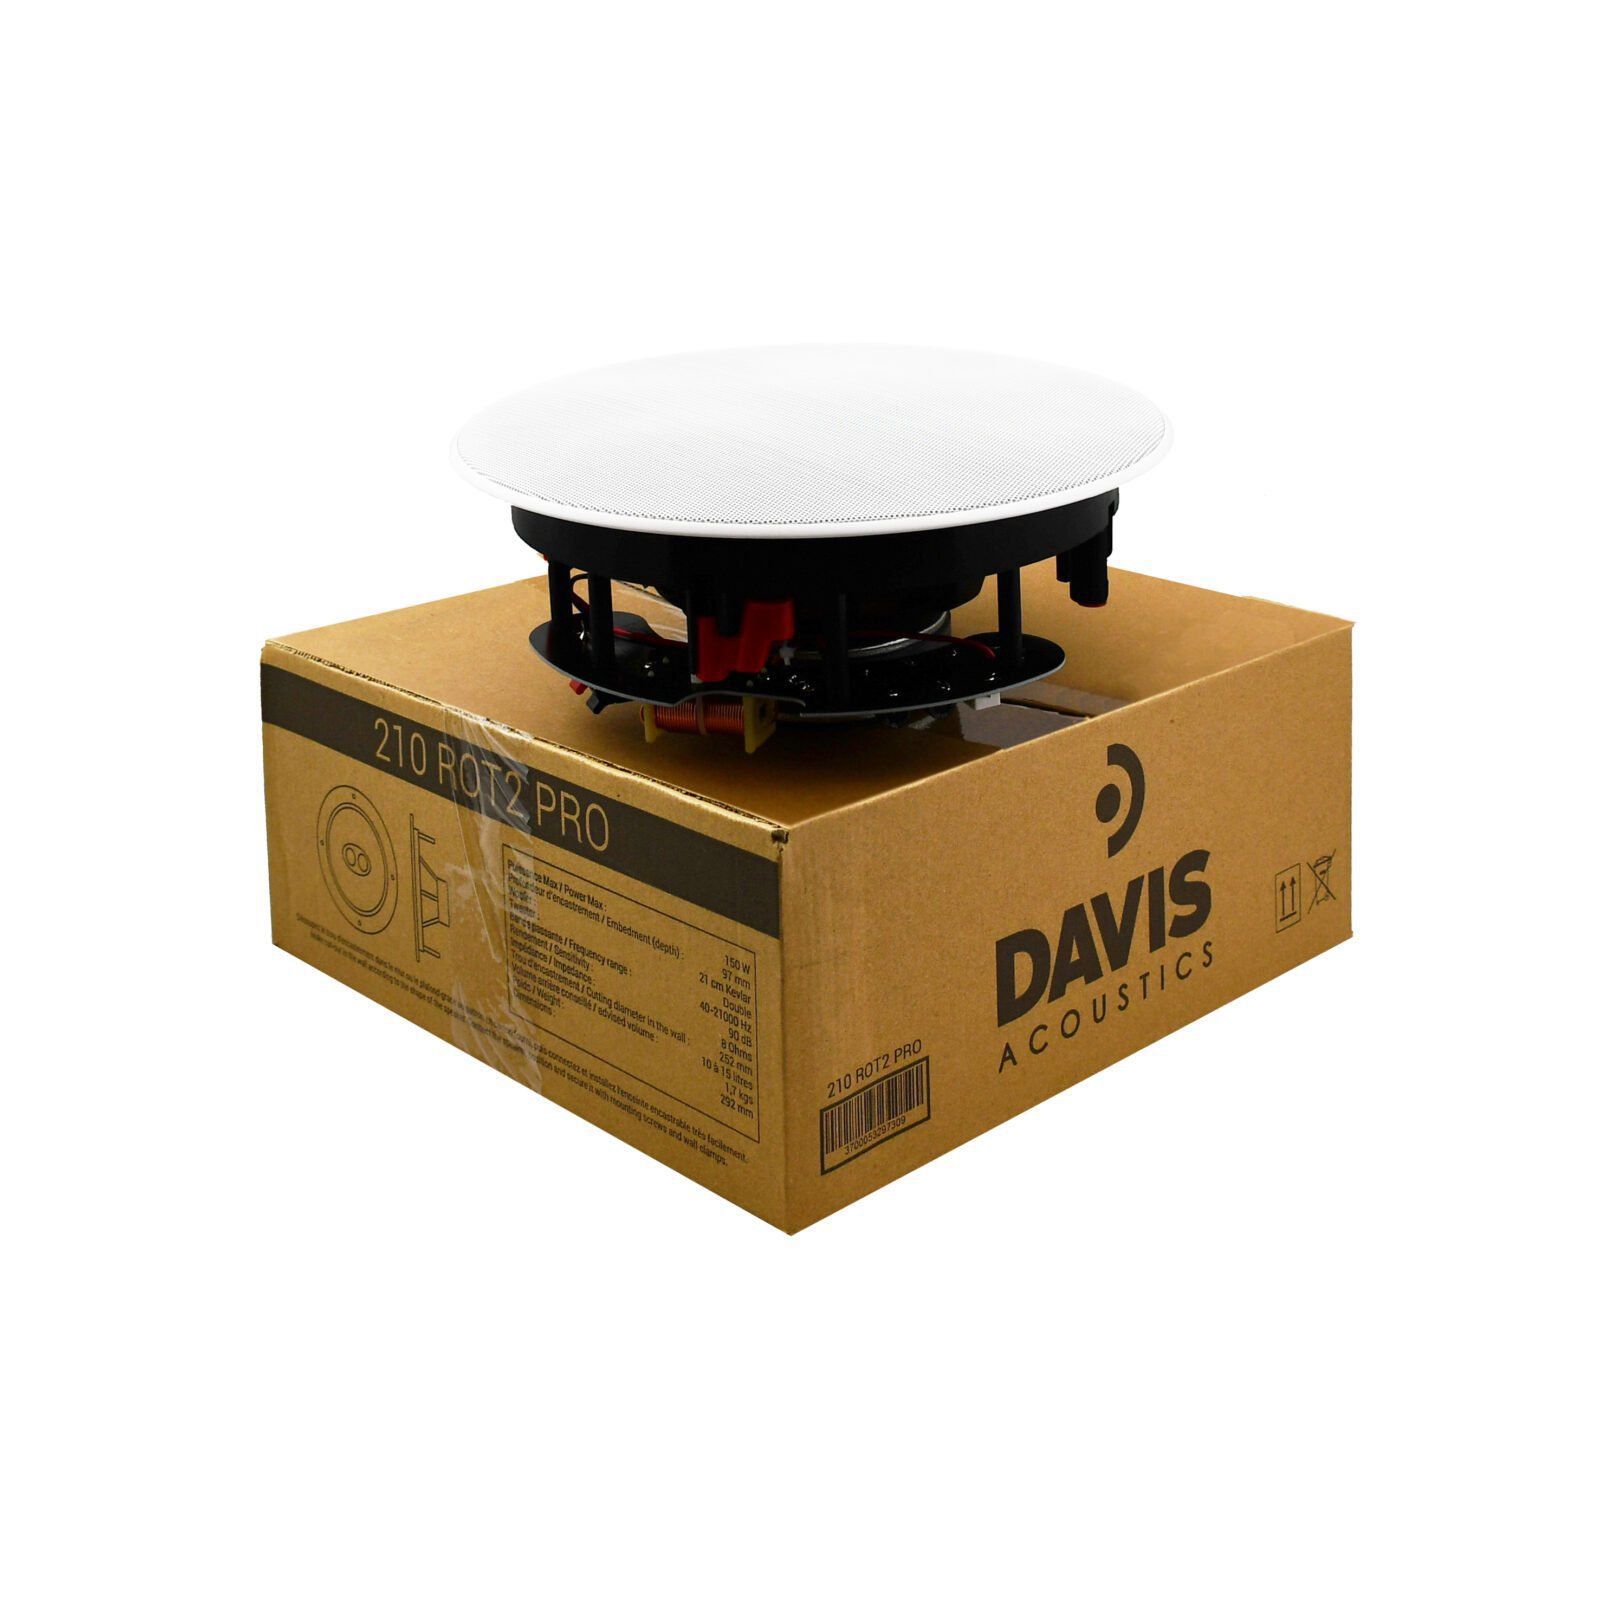 Davis Acoustics 210 ROT2 PRO Встраиваемая акустика